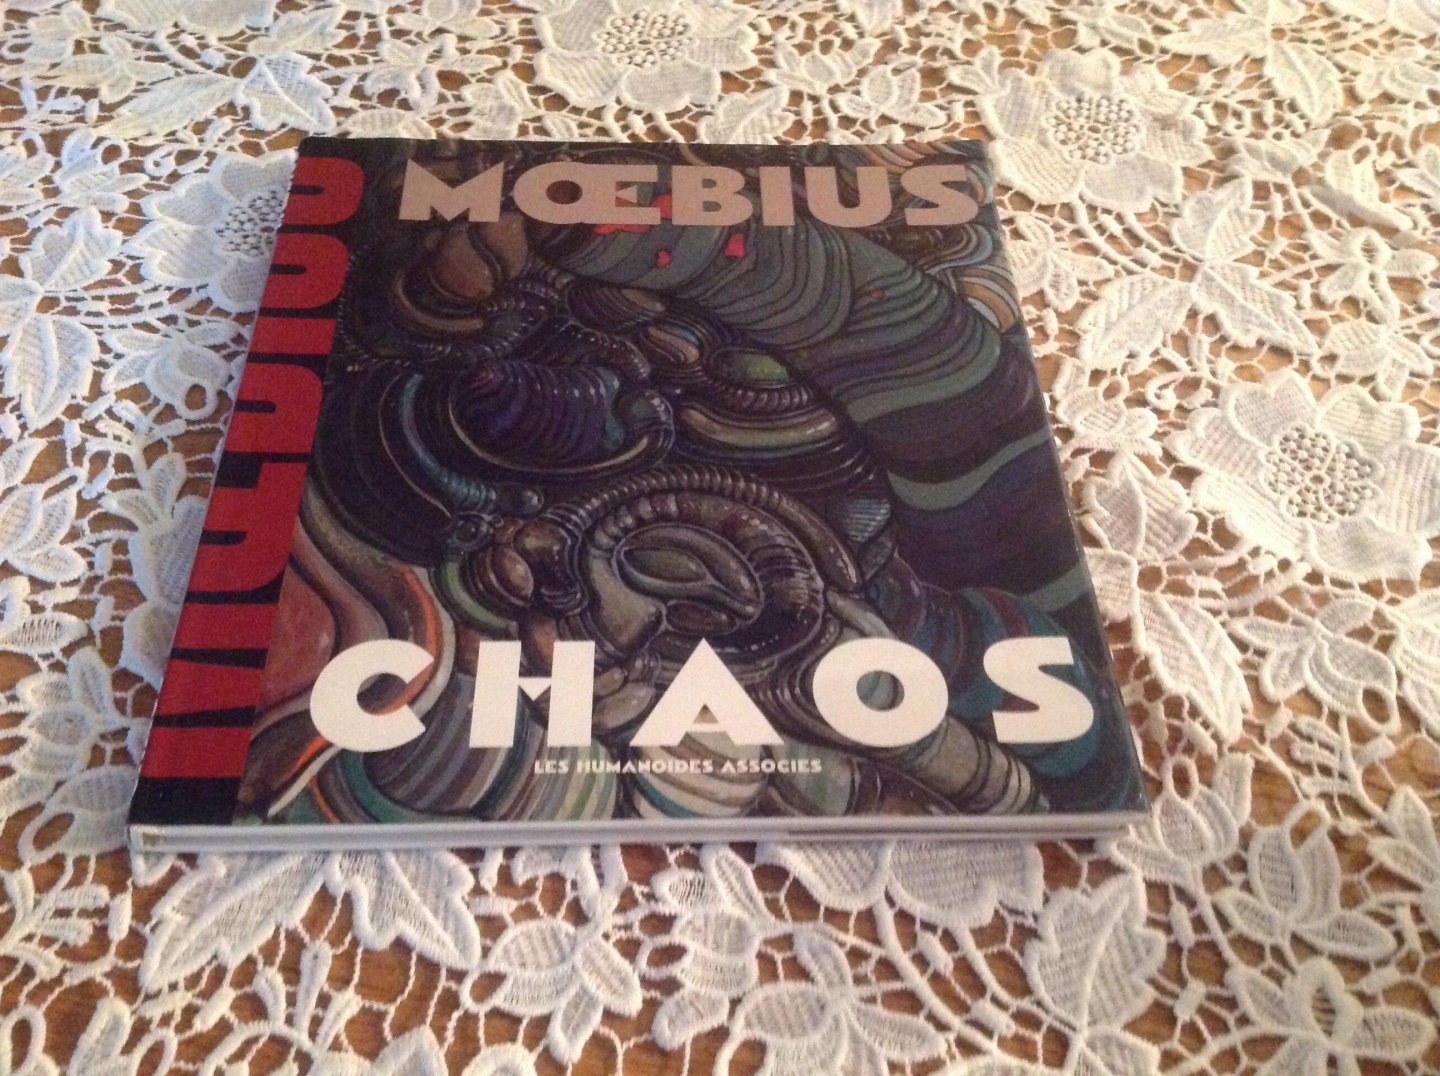 Moebius - Chaos